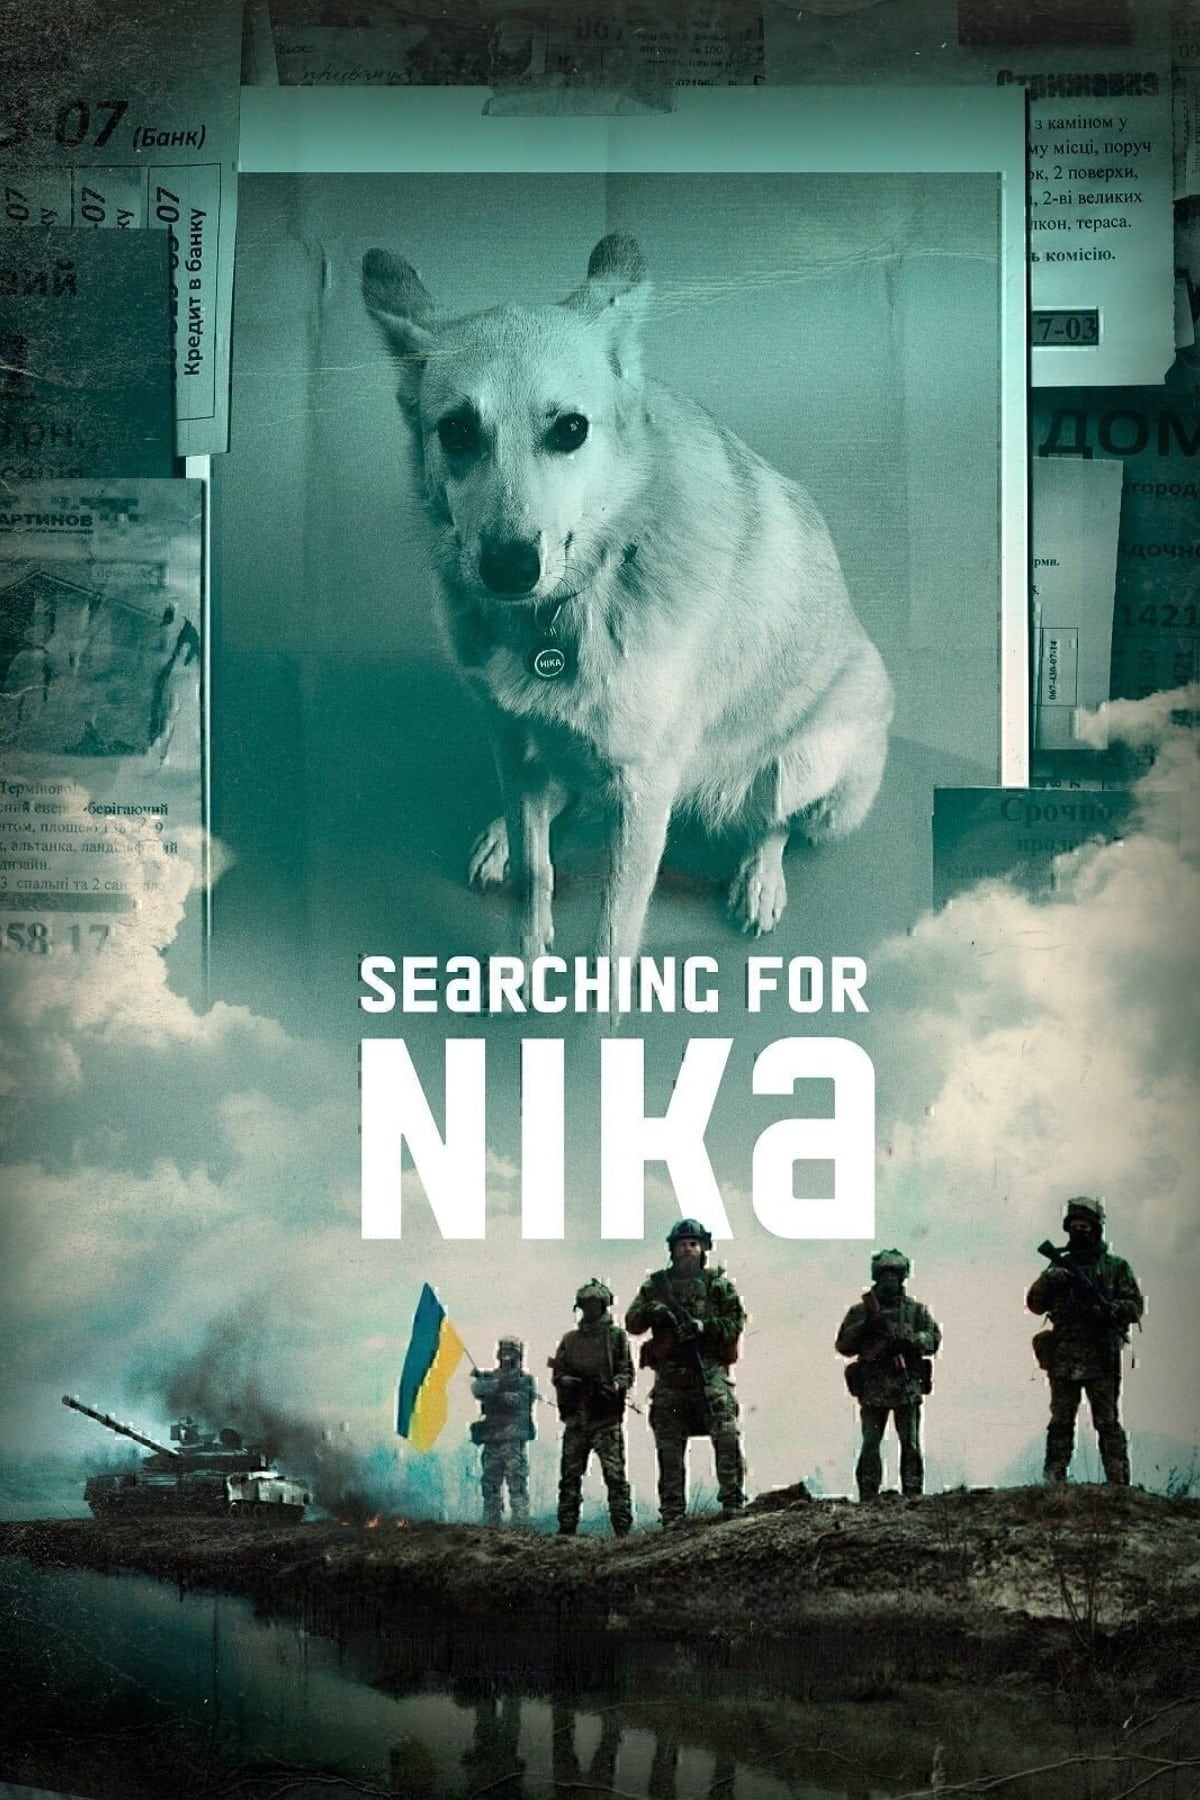 Searching for Nika